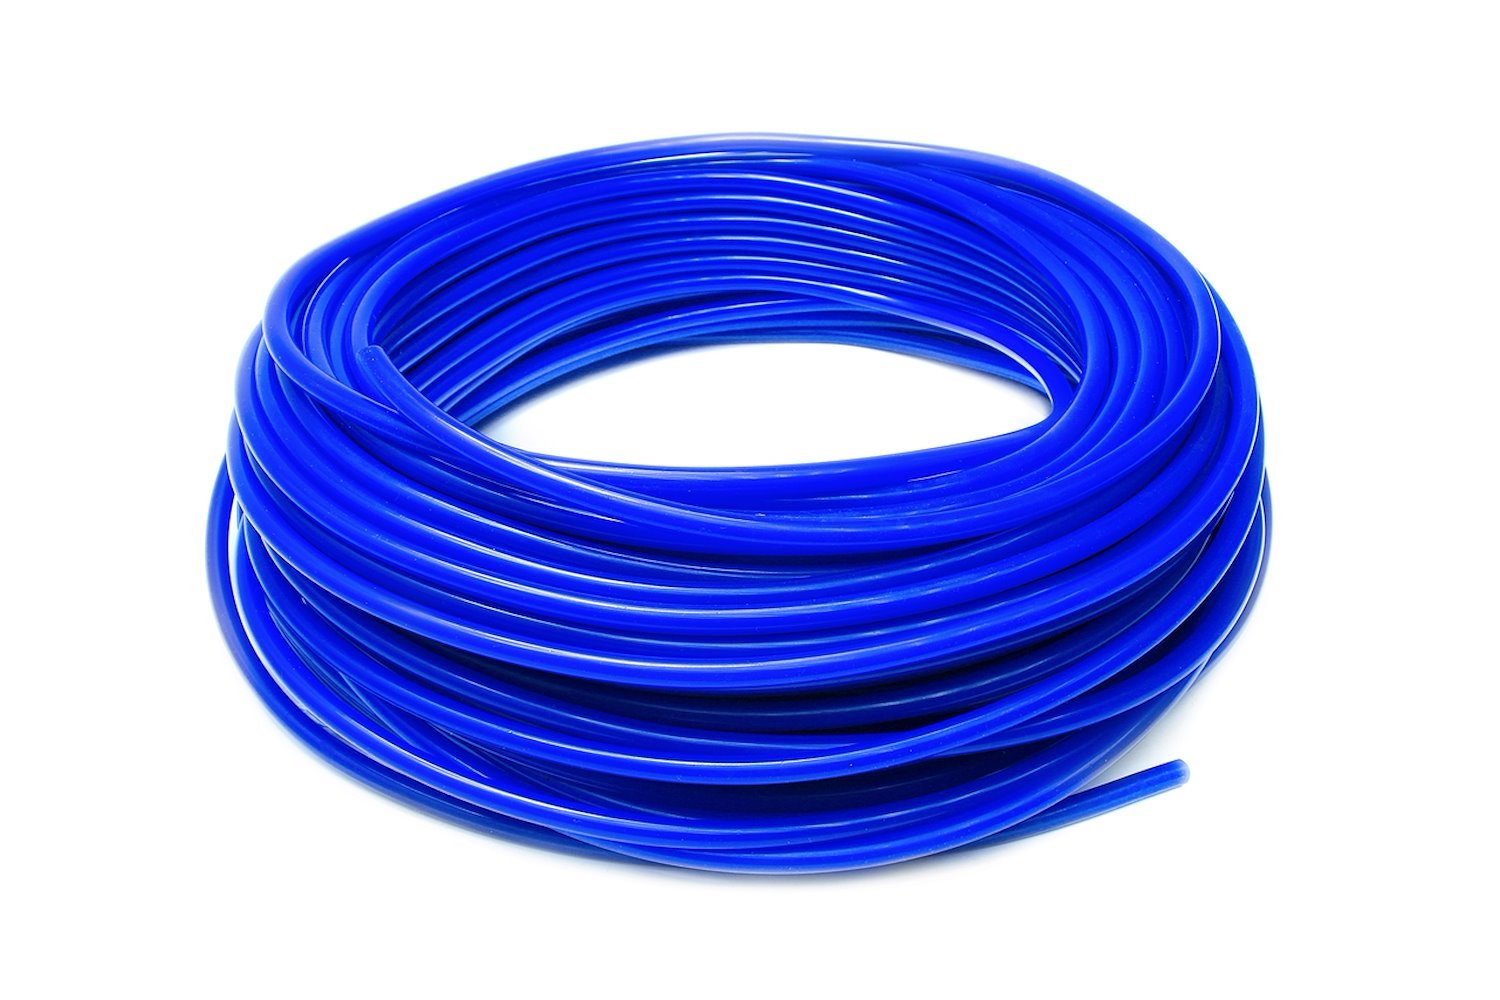 HTSVH10-BLUEx50 High-Temperature Silicone Vacuum Hose Tubing, 10 mm ID, 50 ft. Roll, Blue